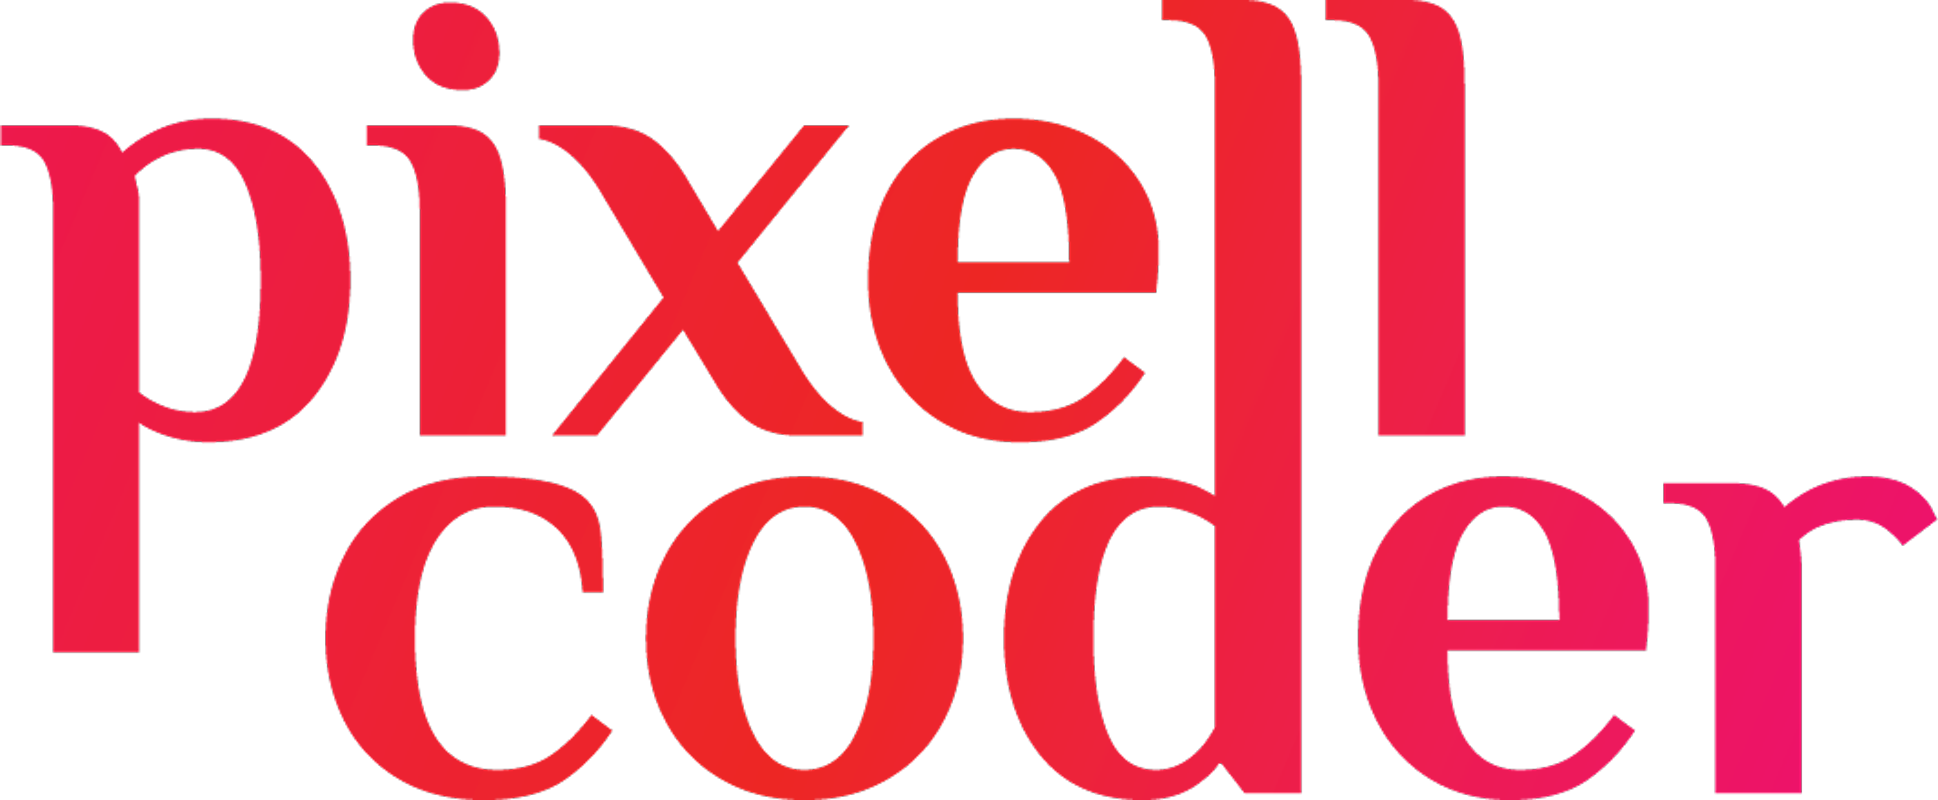 pixellcoder | web development in dhaka